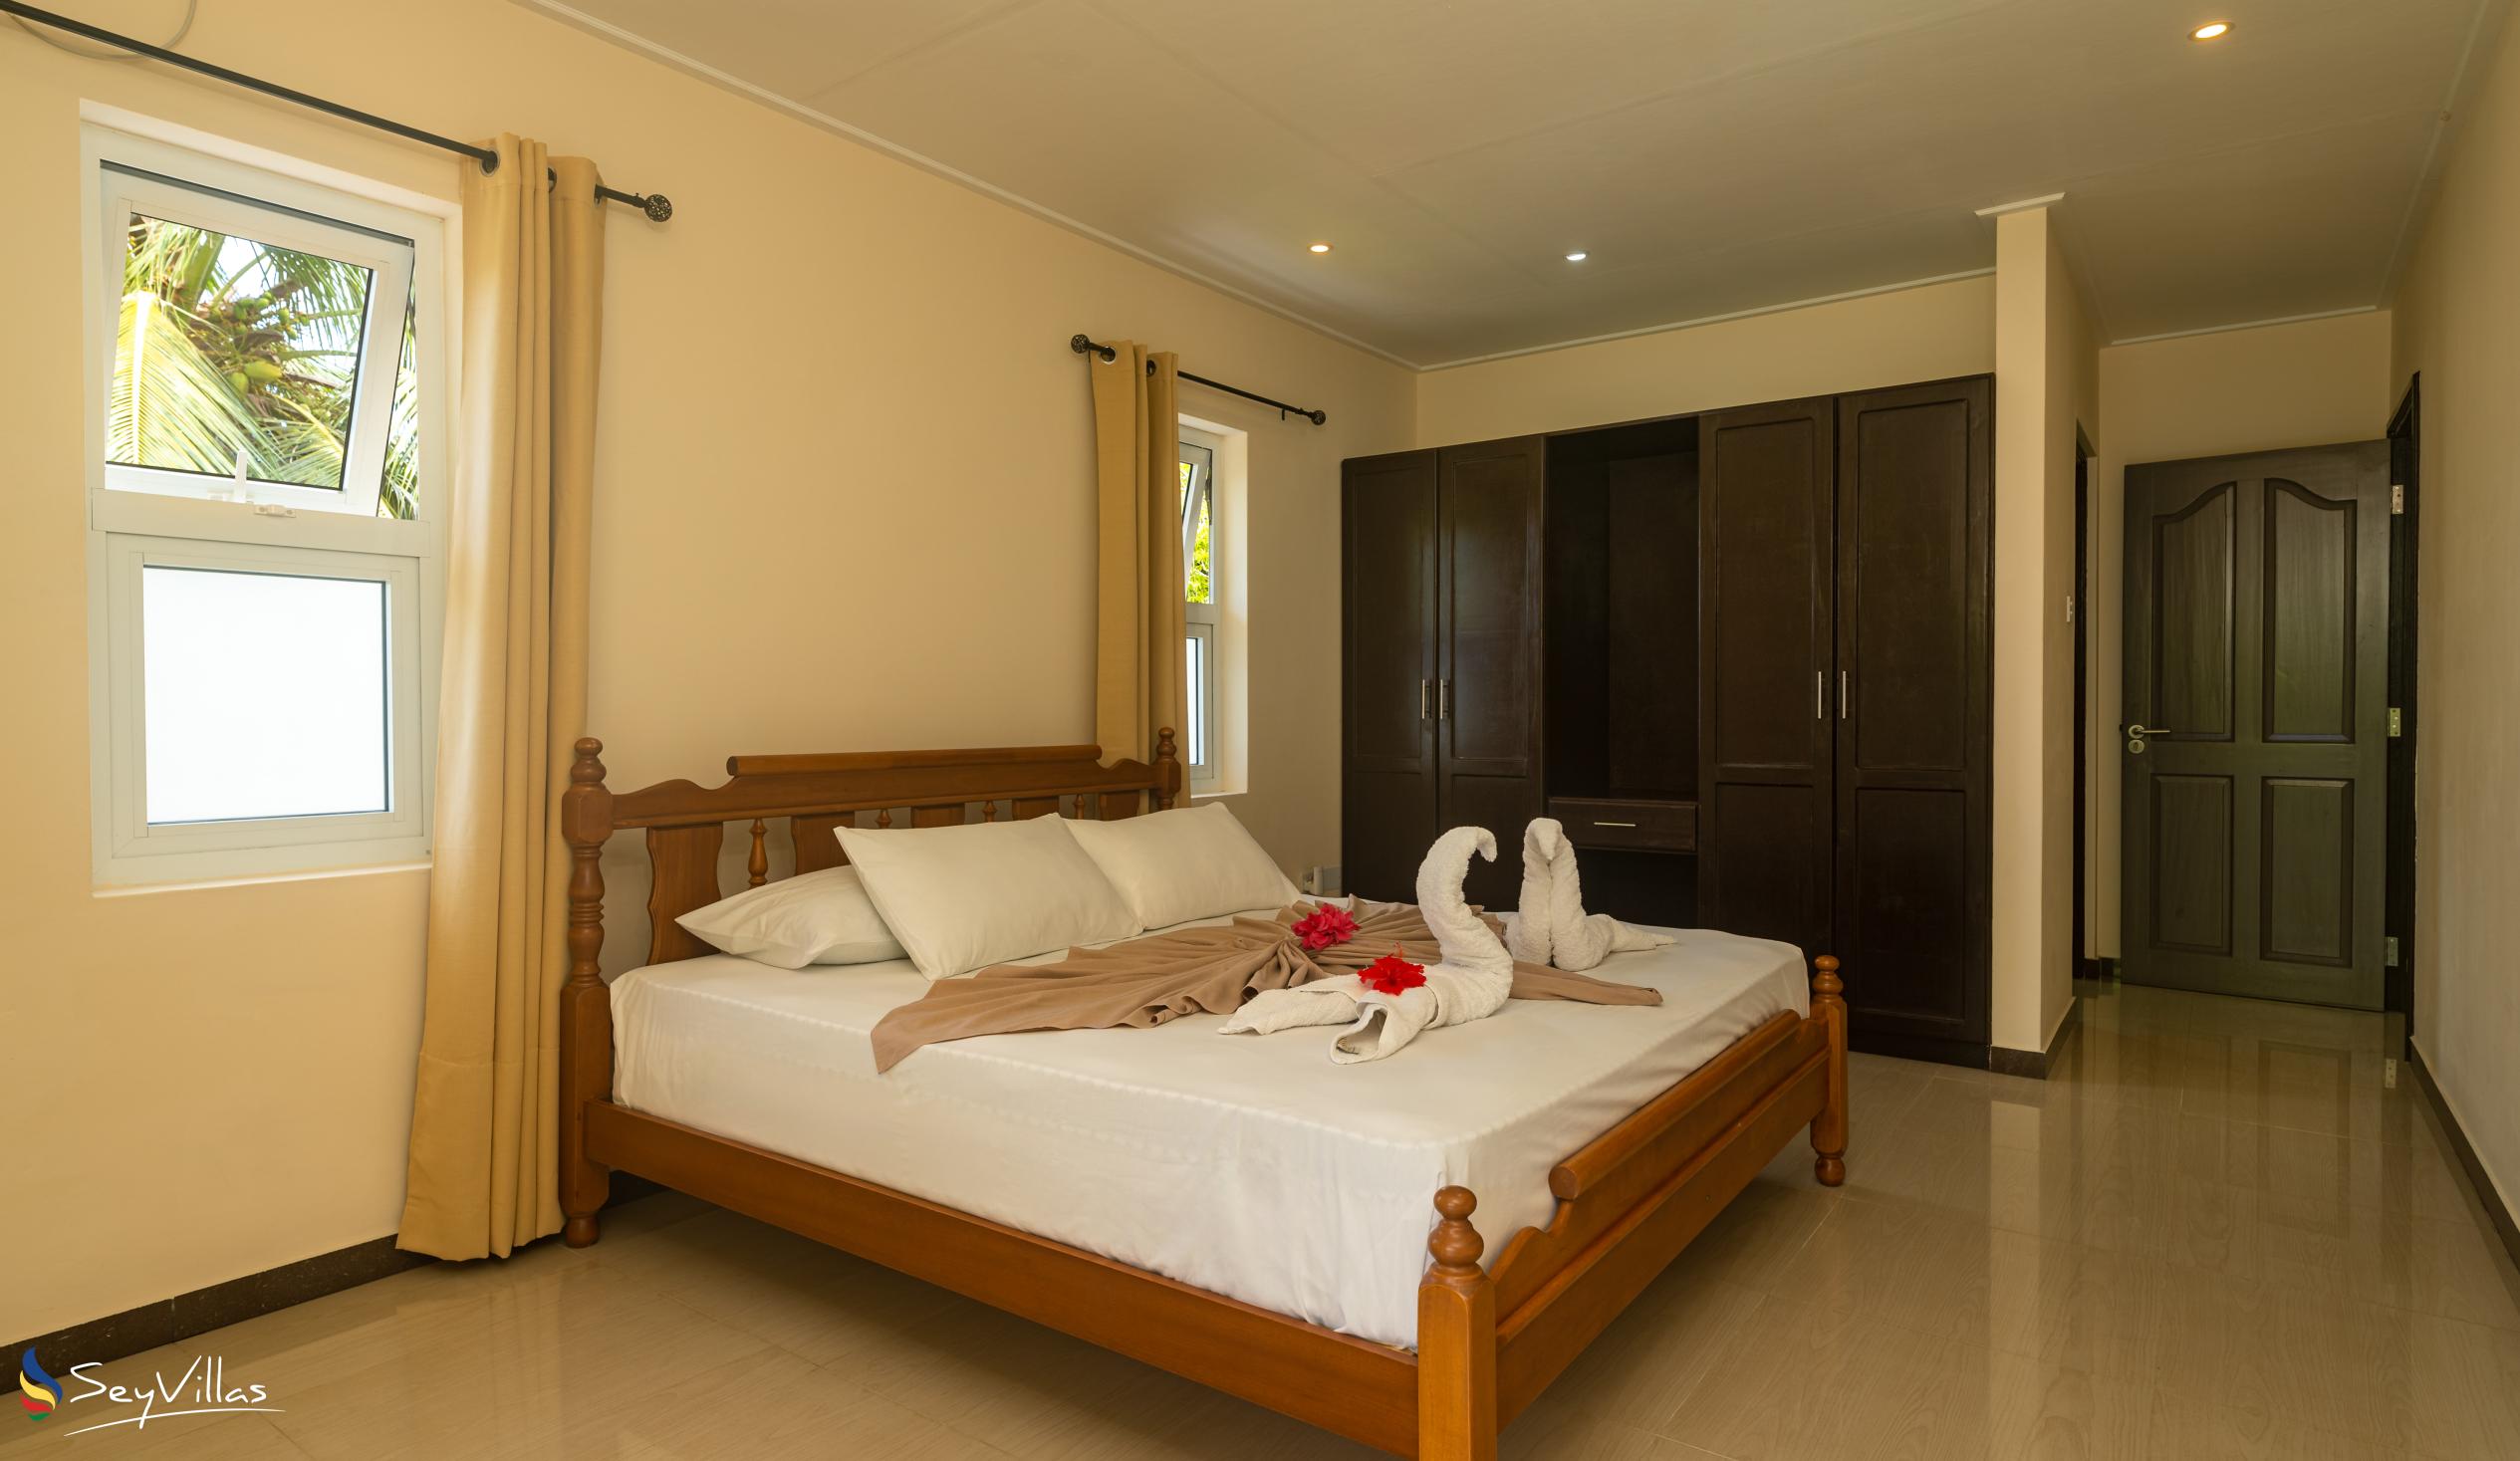 Photo 60: JAIDSS Holiday Apartments - 2-Bedroom Apartment - Mahé (Seychelles)